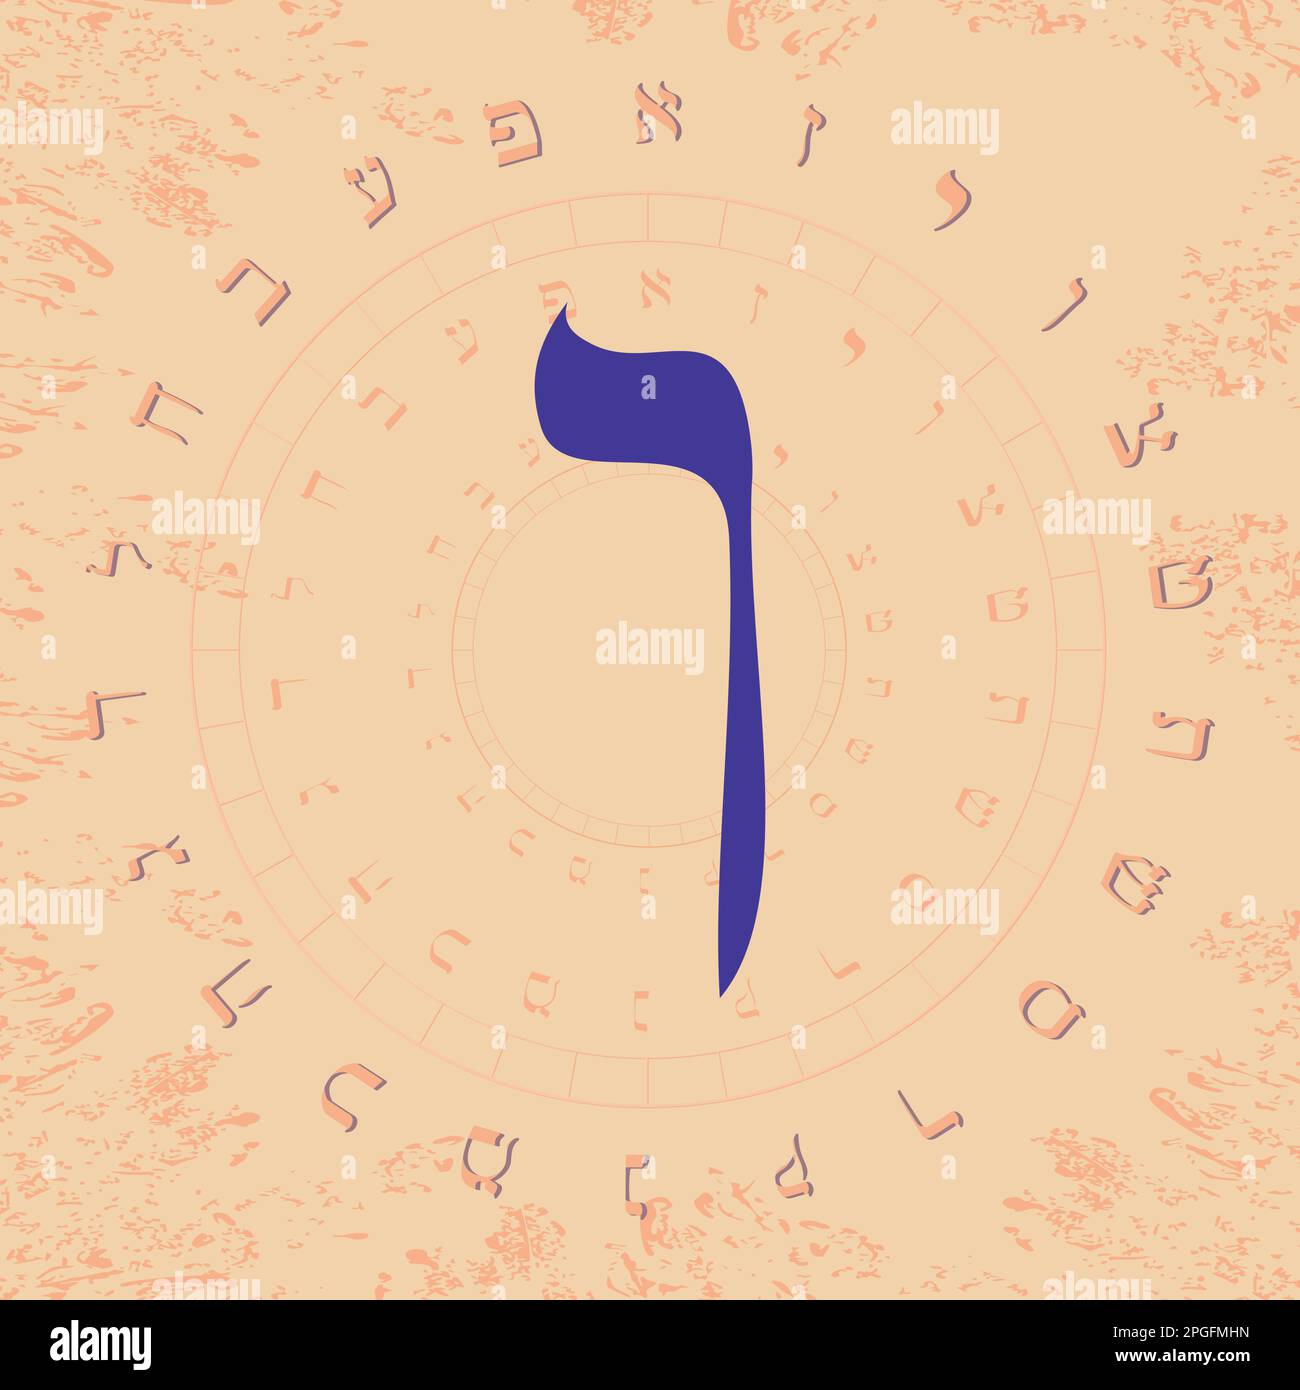 Vector illustration of the Hebrew alphabet in circular design. Large blue Hebrew letter called Vav. Stock Vector